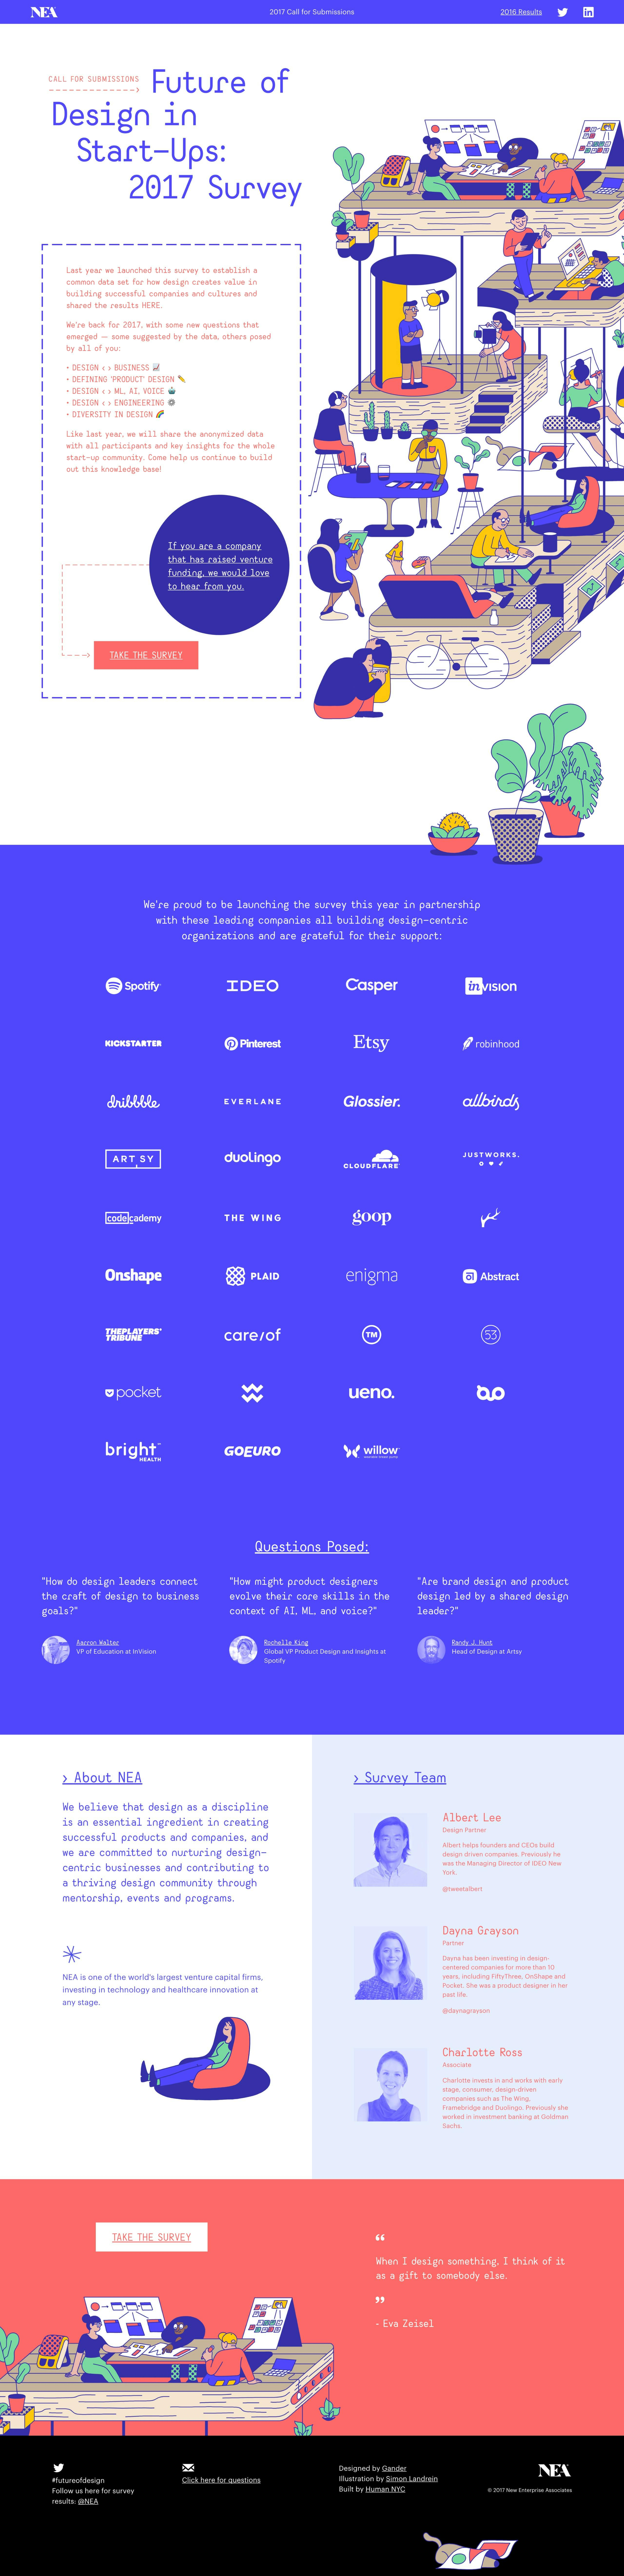 The Future of Design in Start-Ups 2017 Website Screenshot